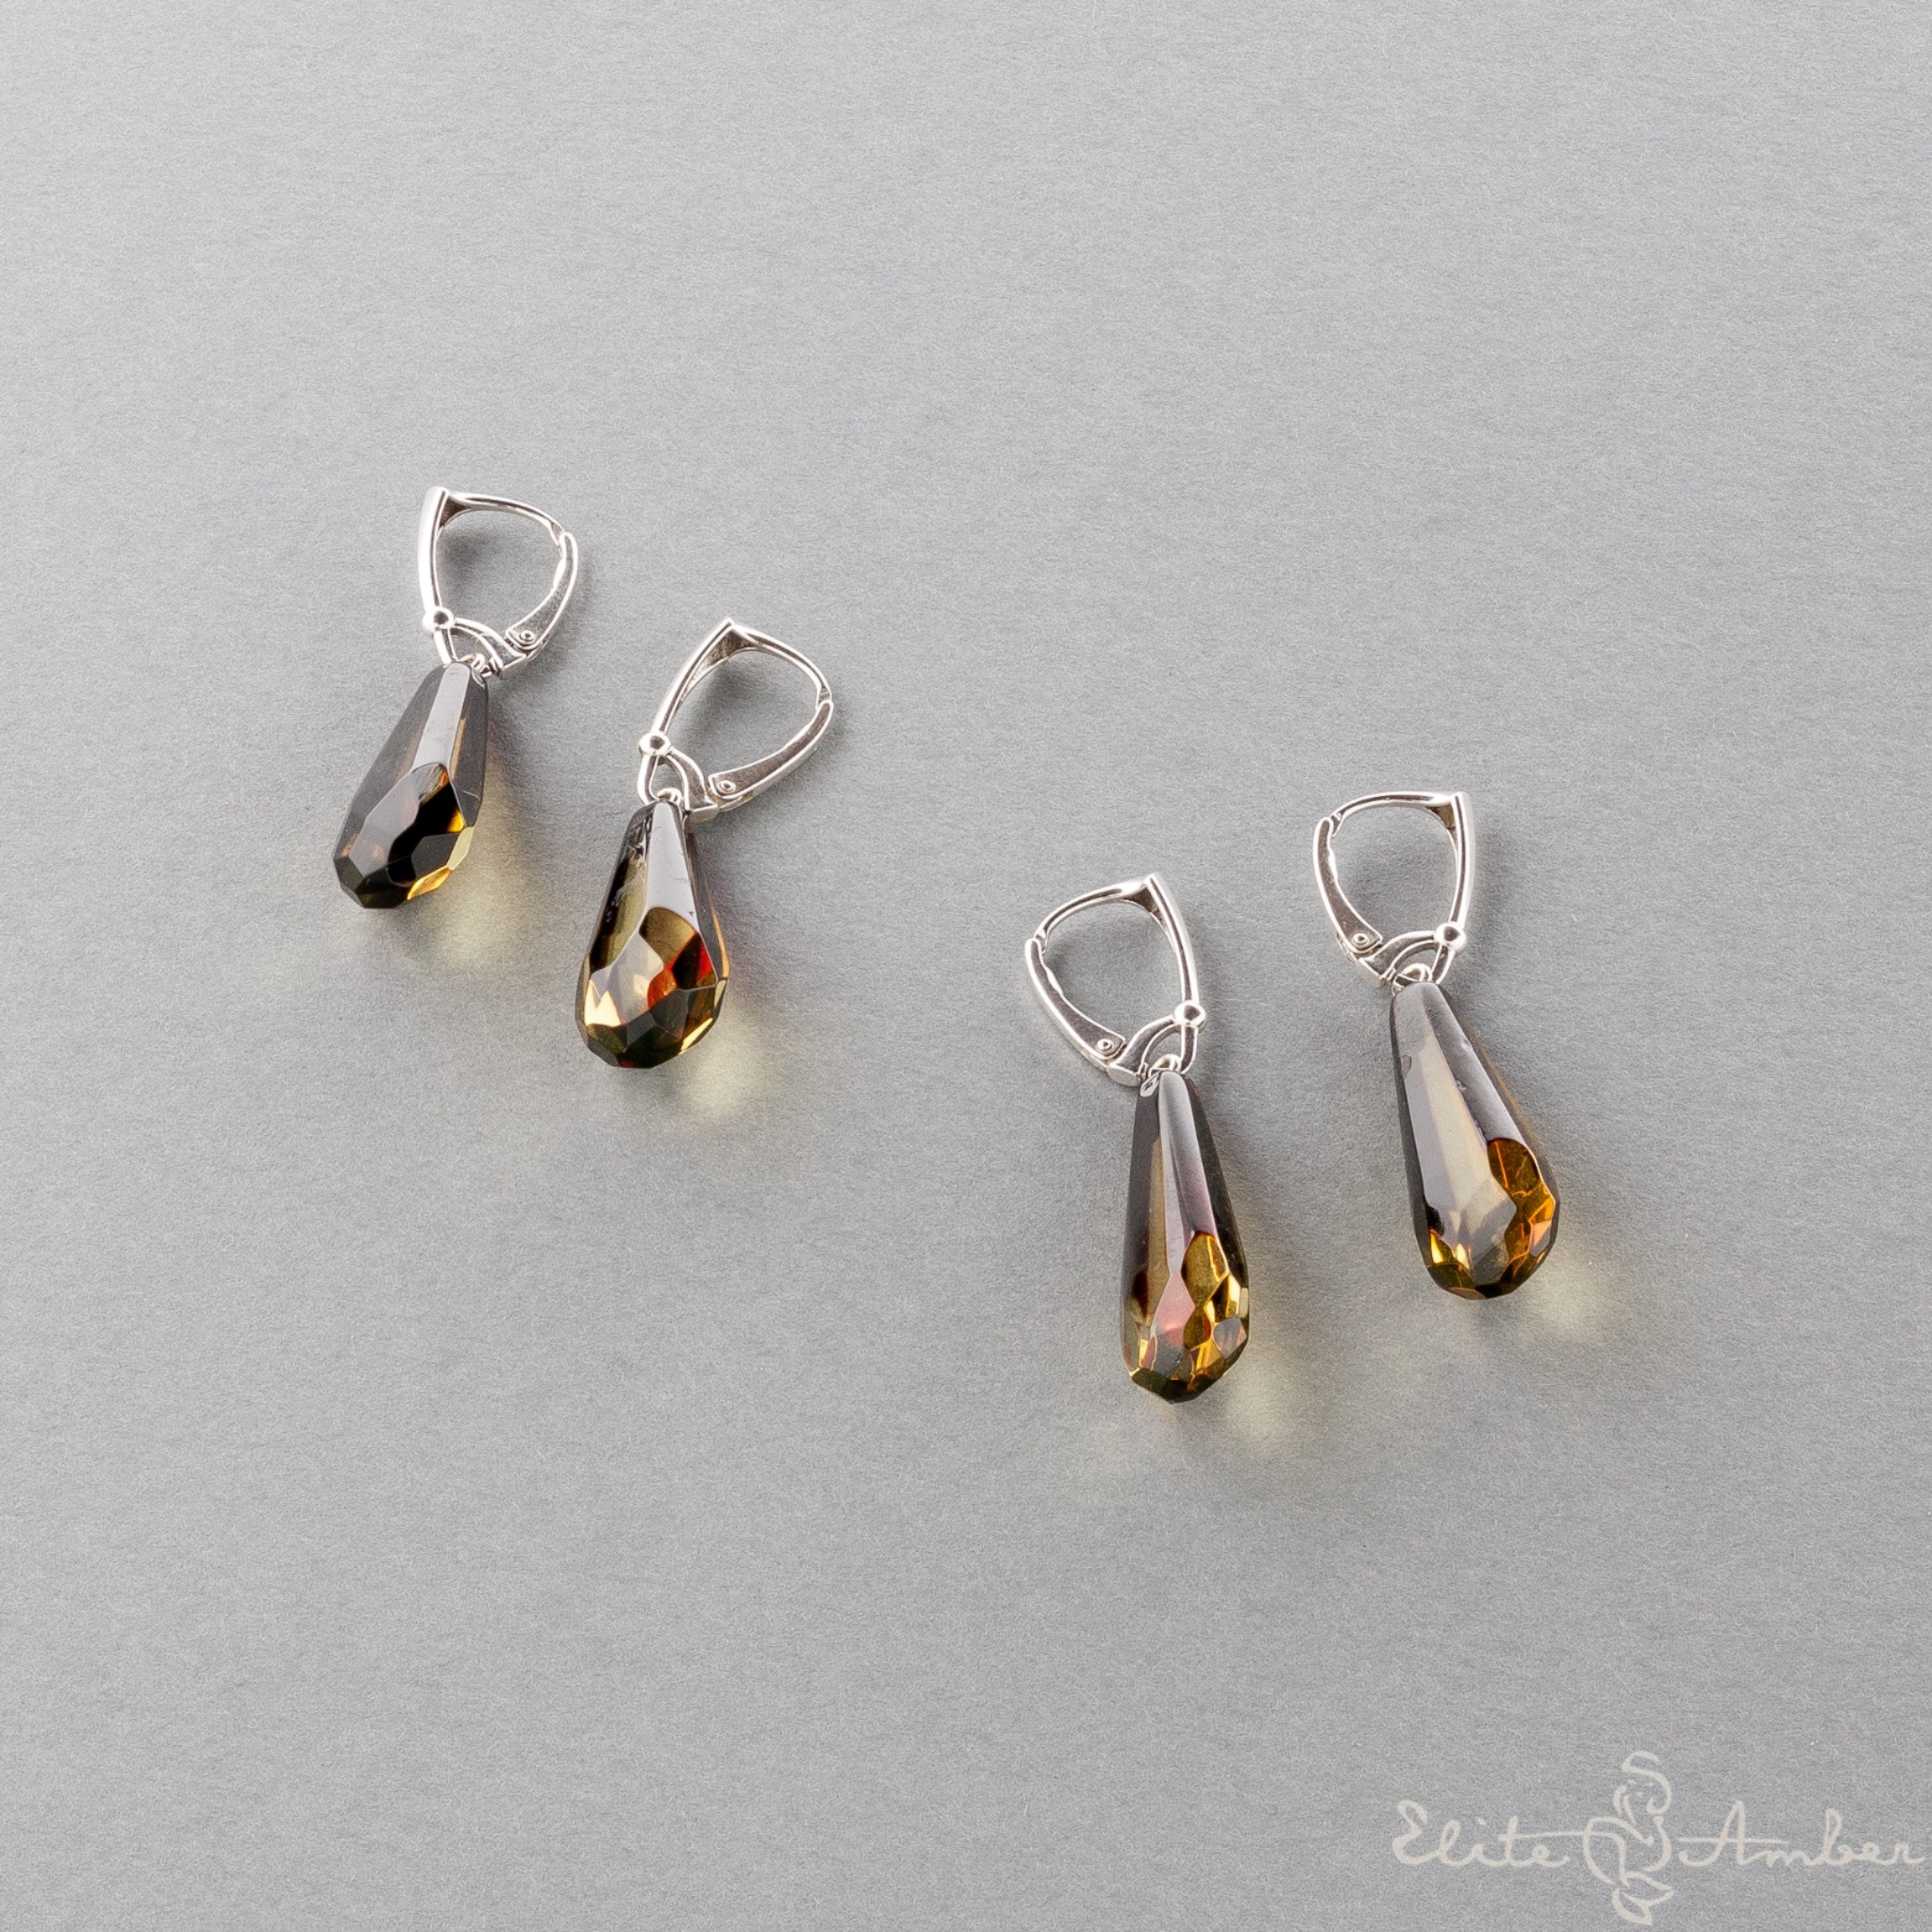 Amber earrings "Greenish droplets"